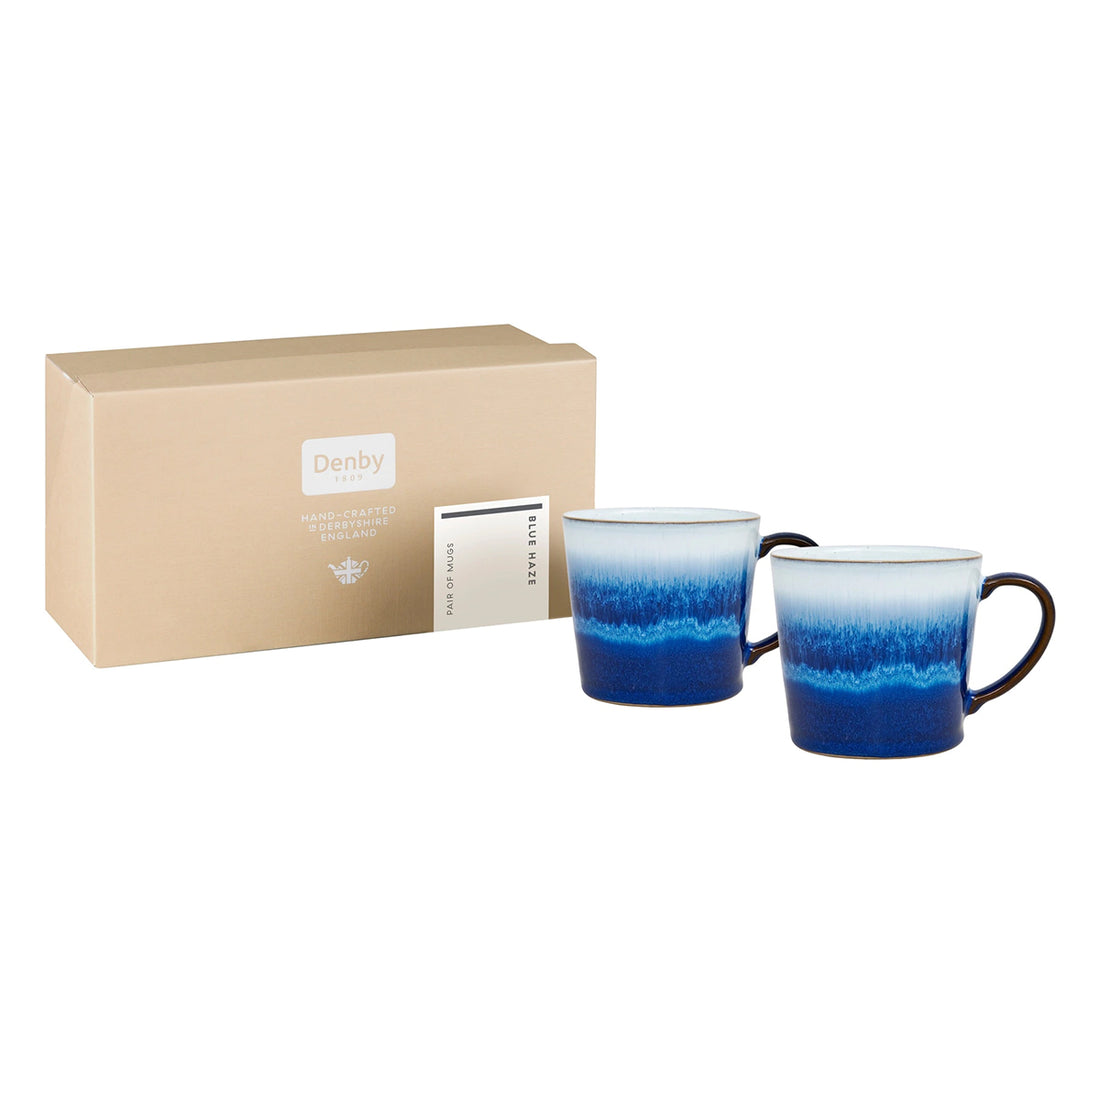 Denby, Denby Blue Haze Large Mugs - Set of 2, Redber Coffee